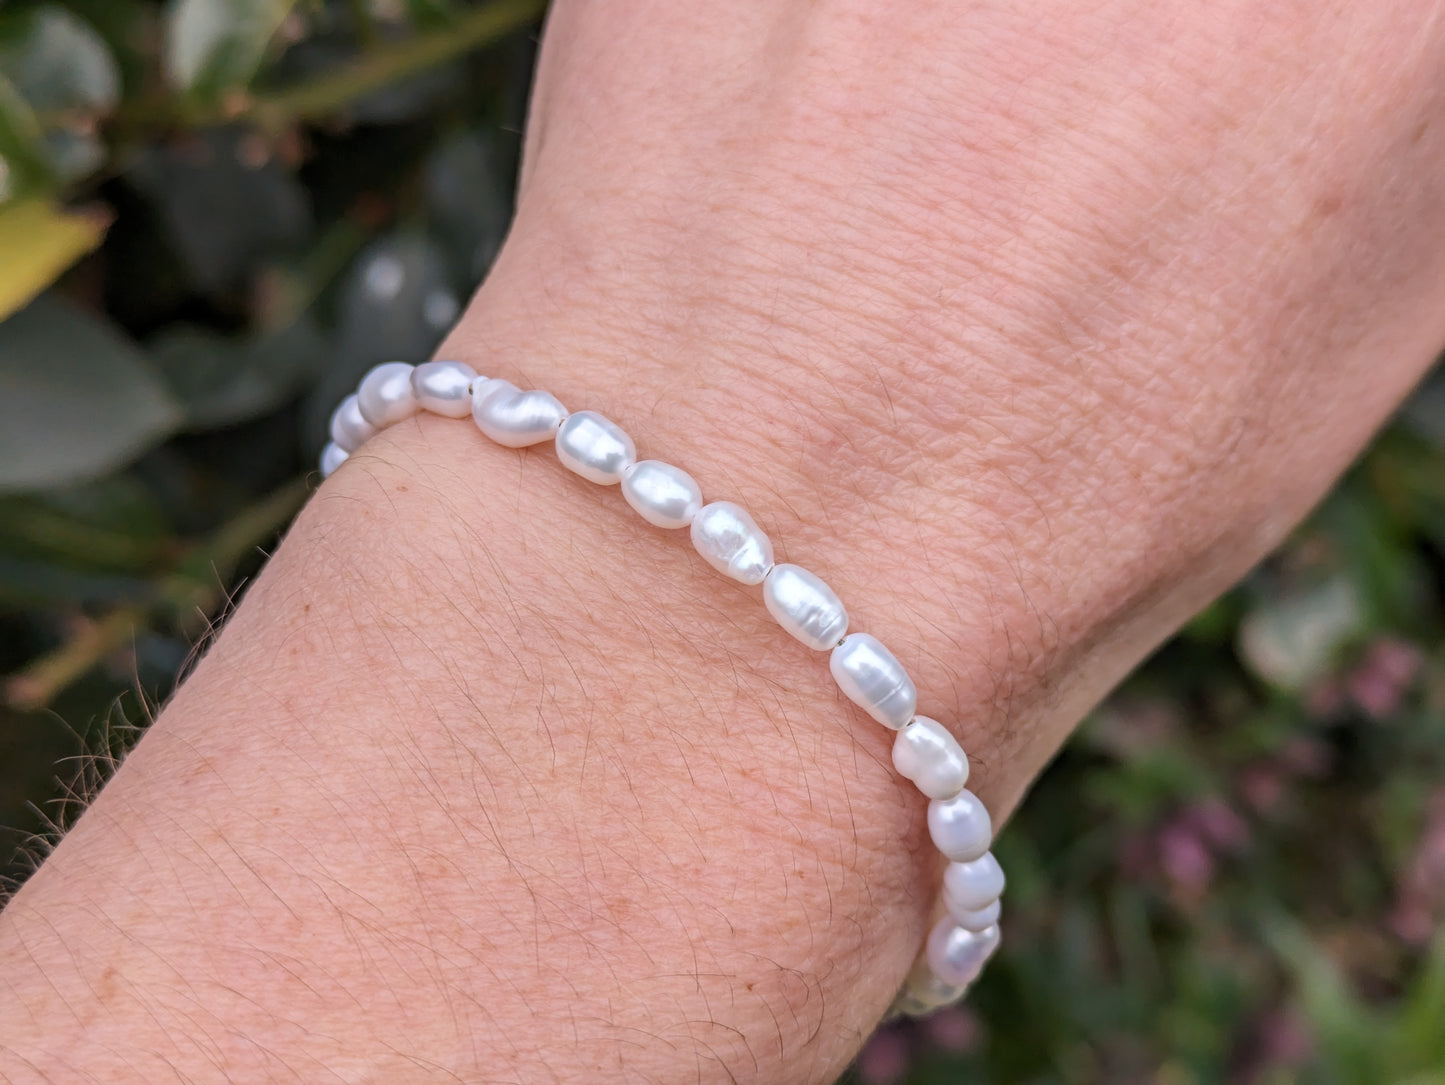 Freshwater pearl bracelet in silver or gold.